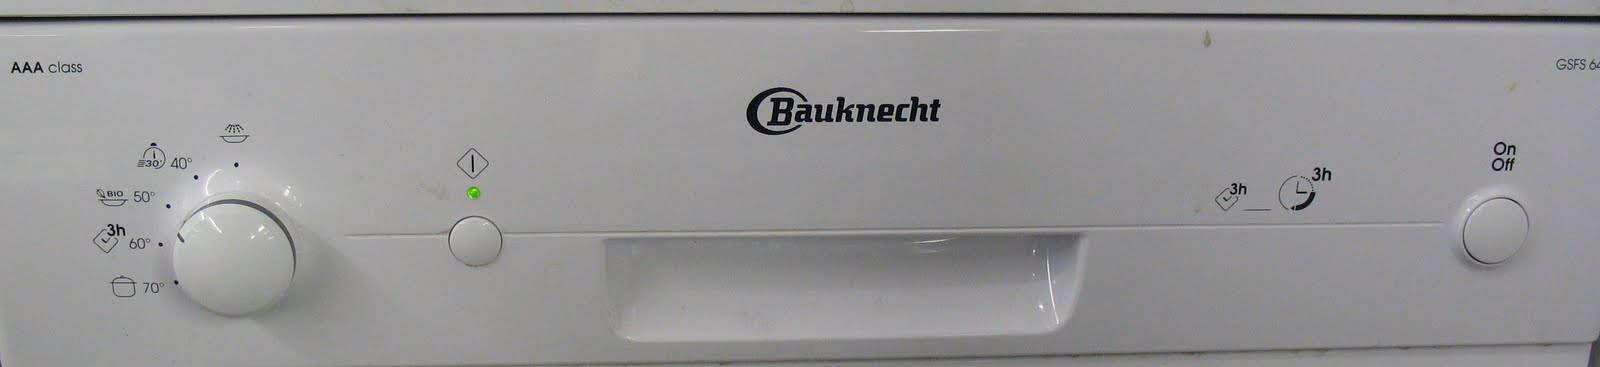 A dishwasher